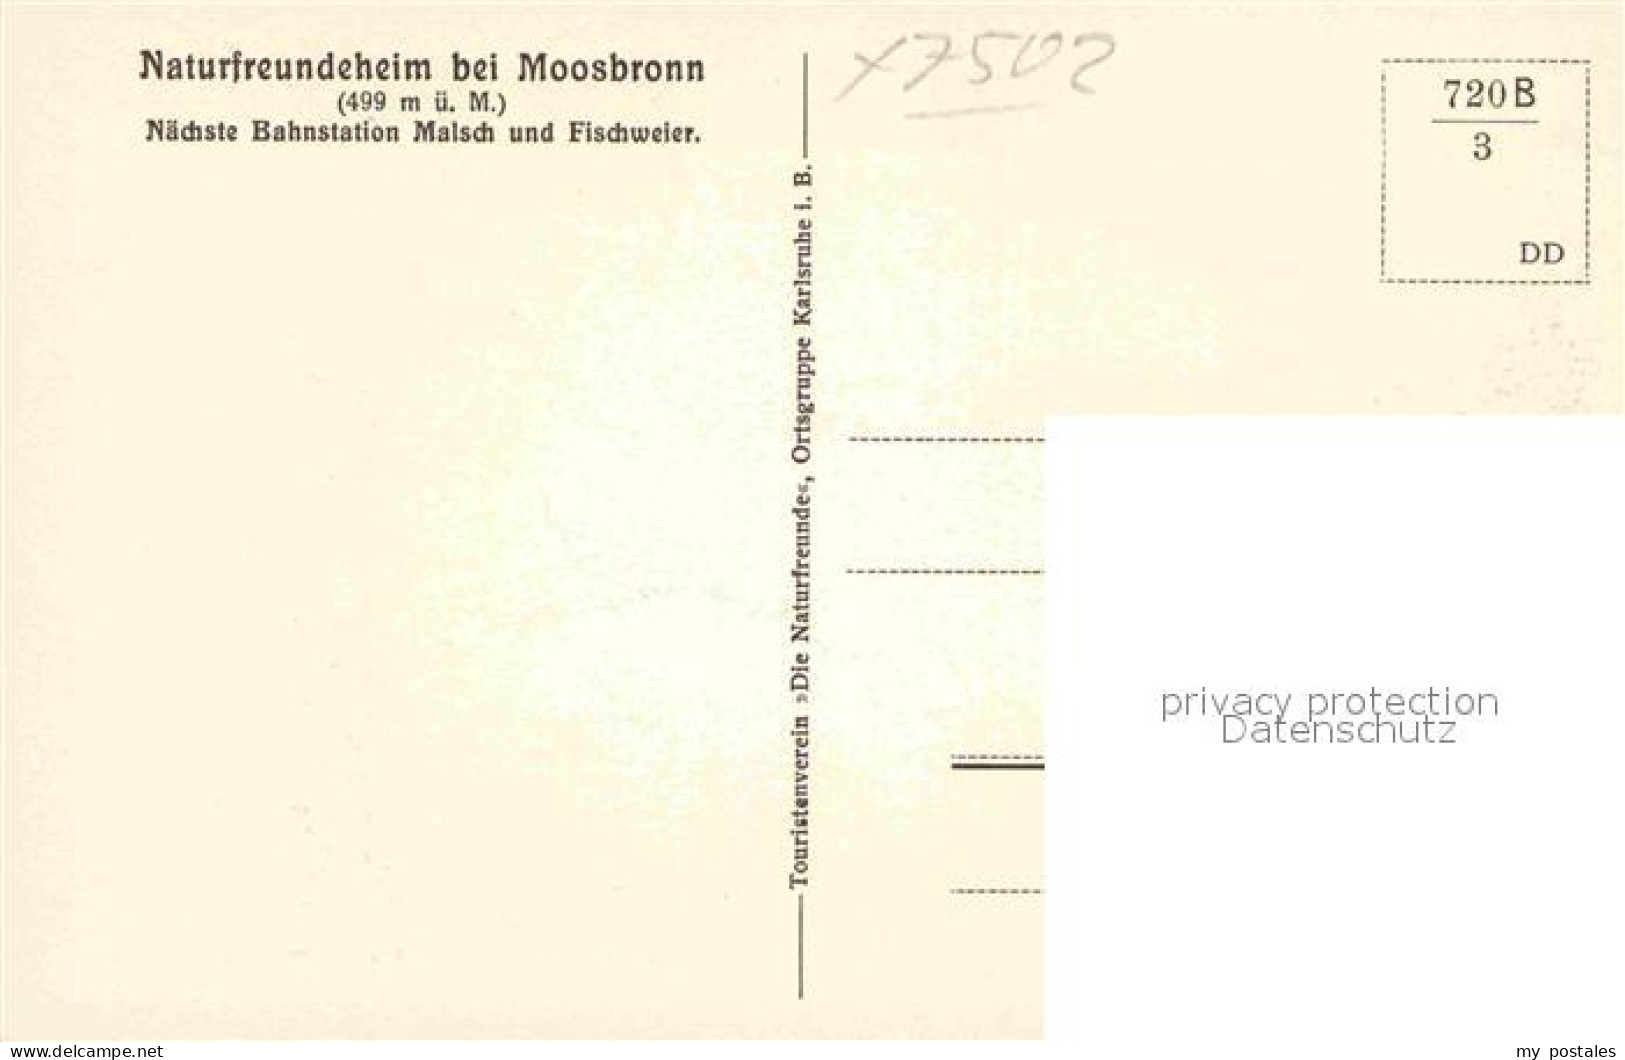 42763216 Moosbronn Naturfreundehaus Moosbronn - Gaggenau